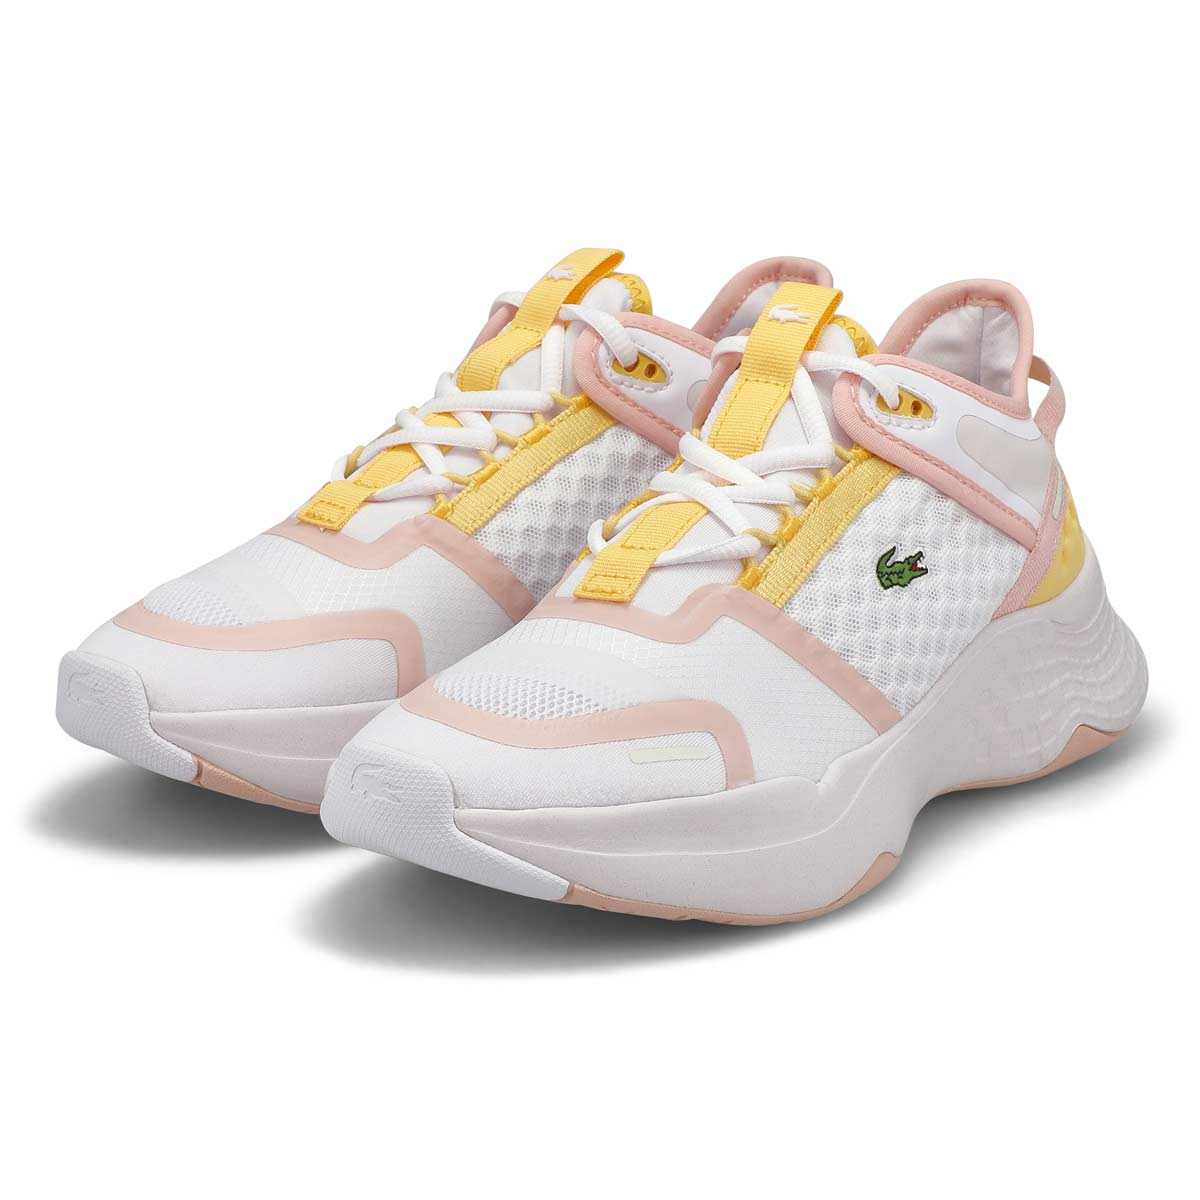 Women's Court-Drive Vnt Sneaker - White/Light Pink